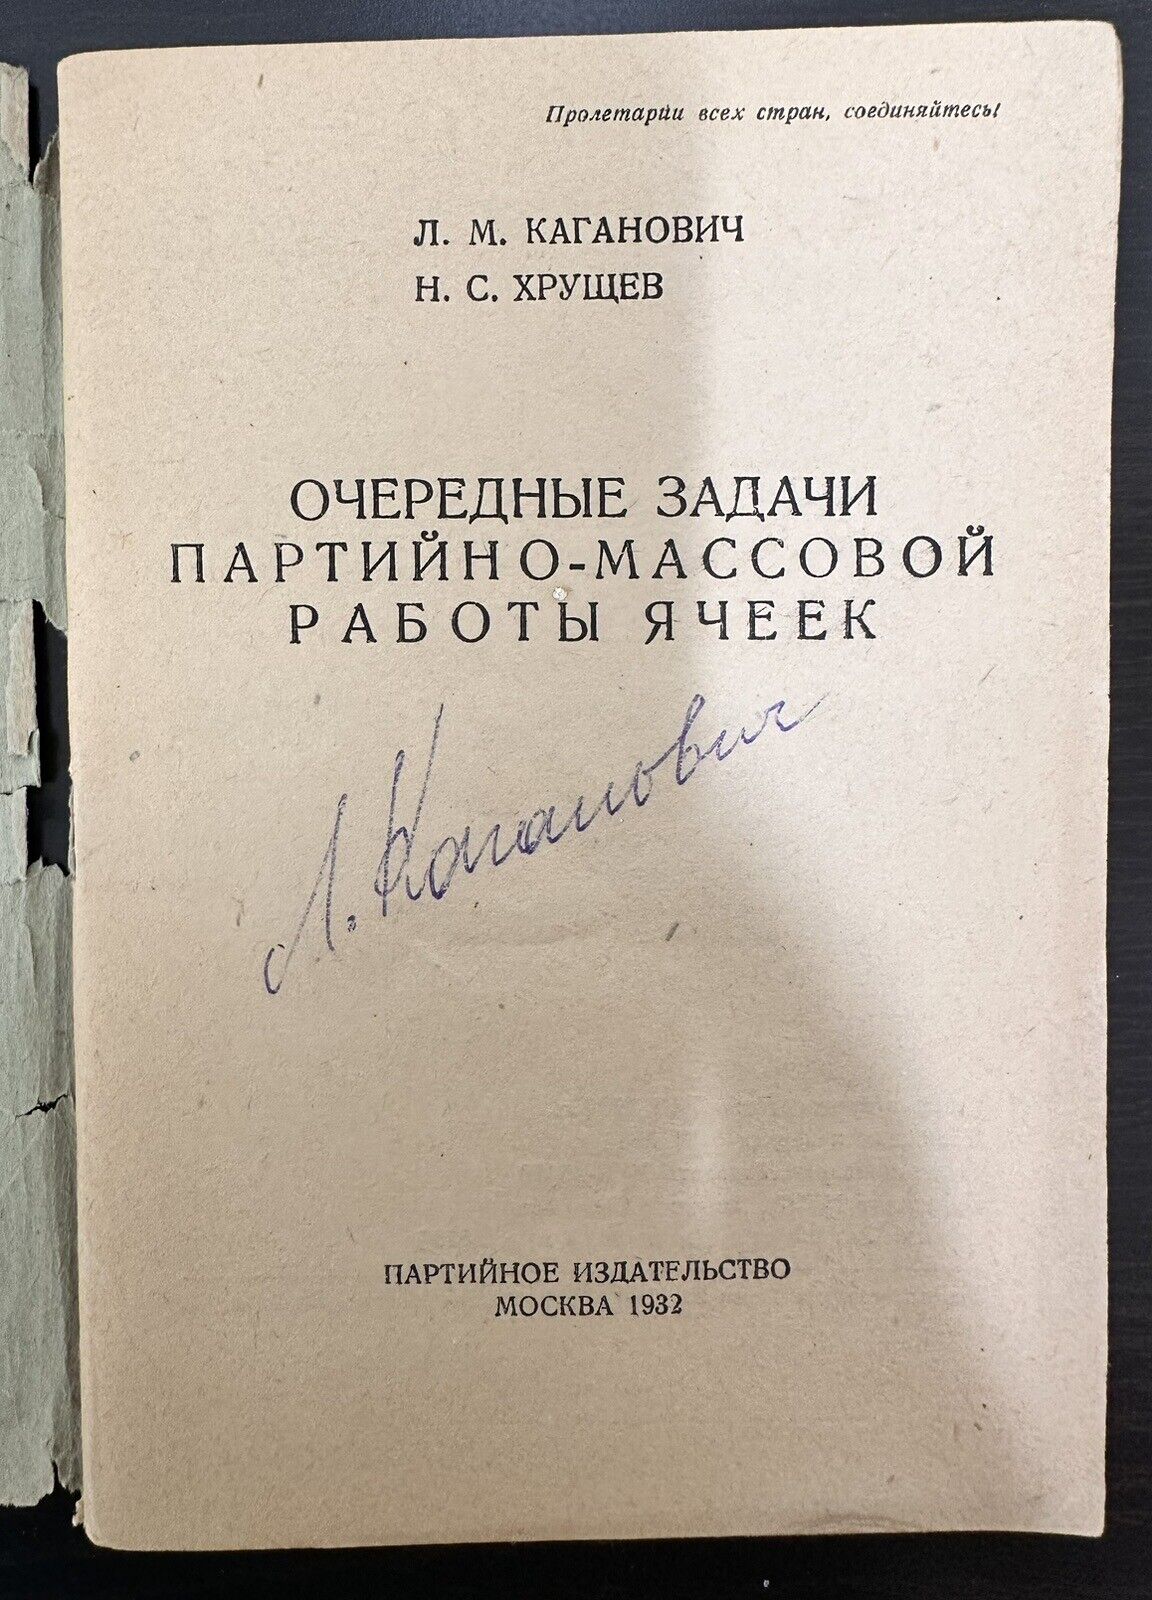 Autograph of Lazar Kaganovich (very rare, with COA)